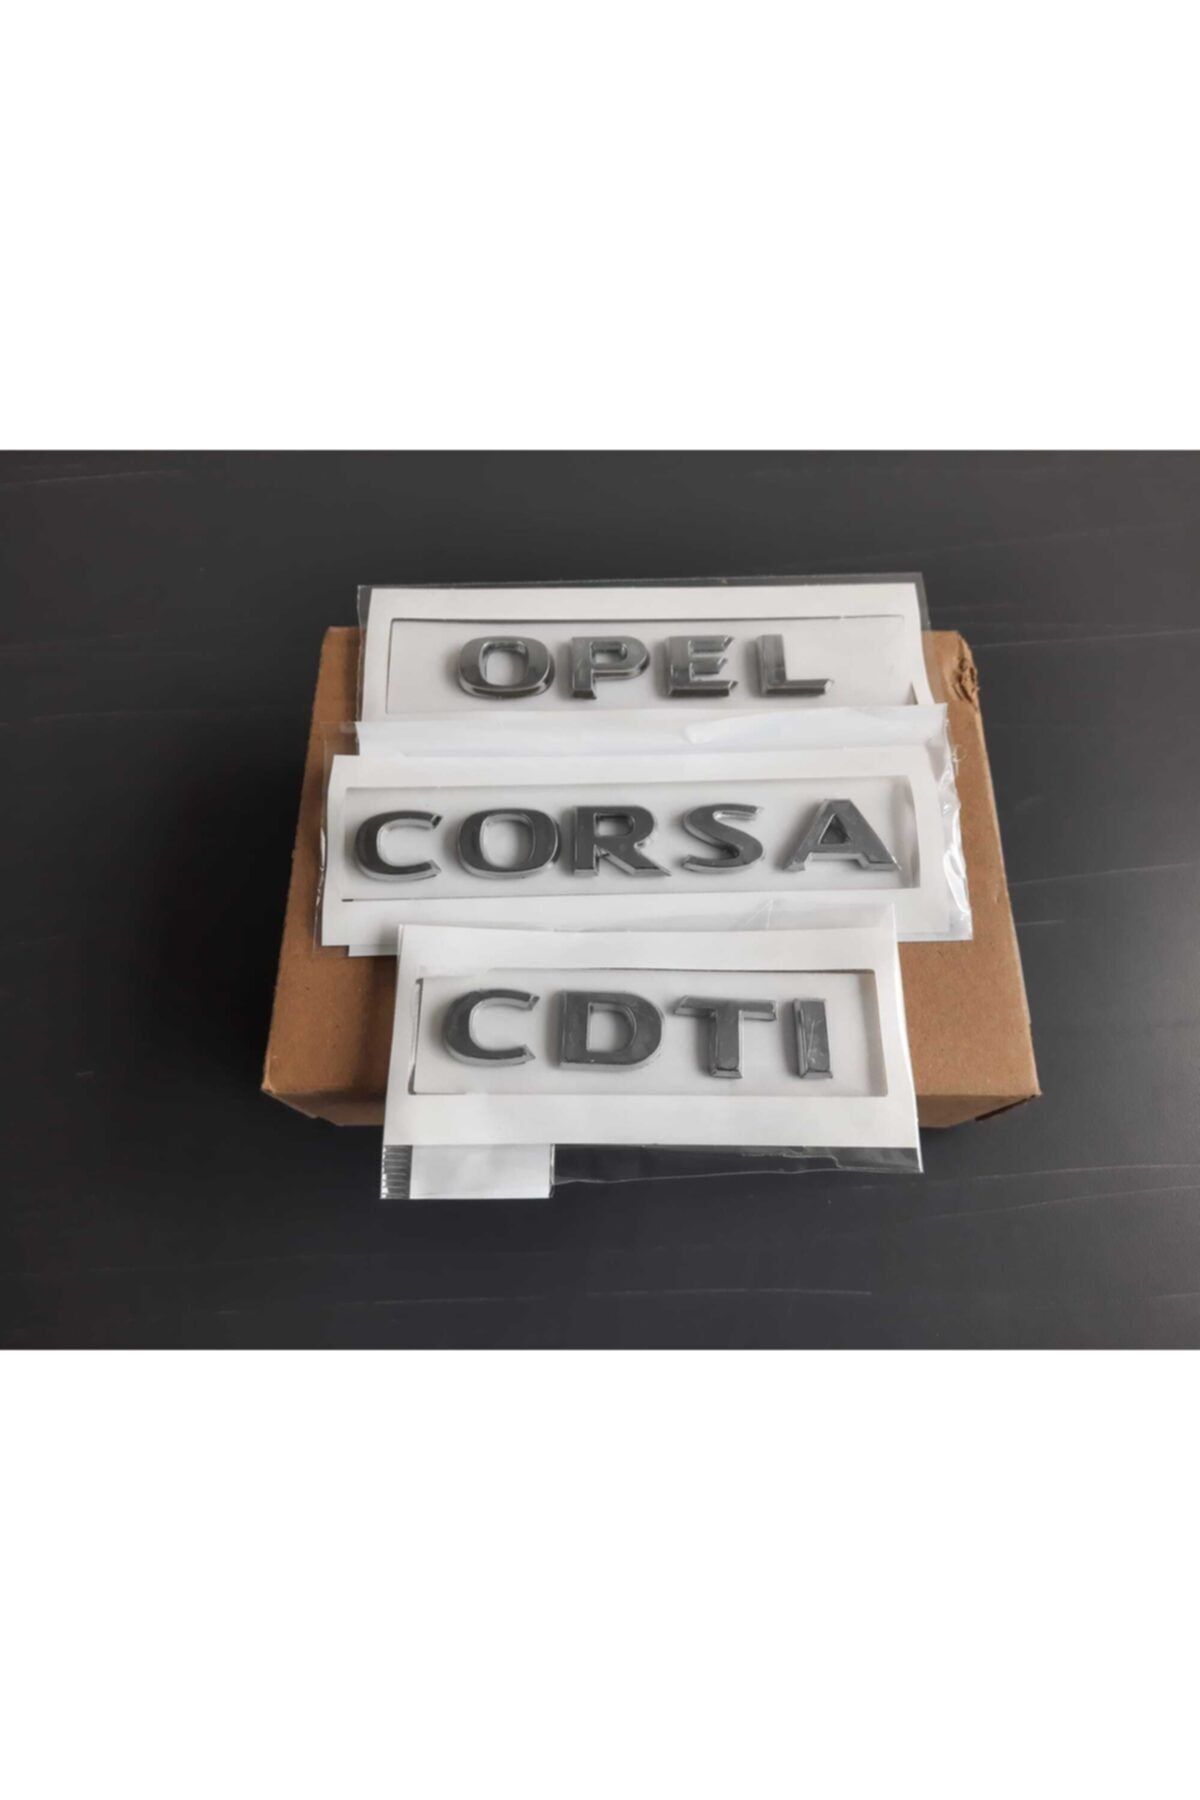 Opel Corsa Cdti-3 Adet-yüksek Kalite